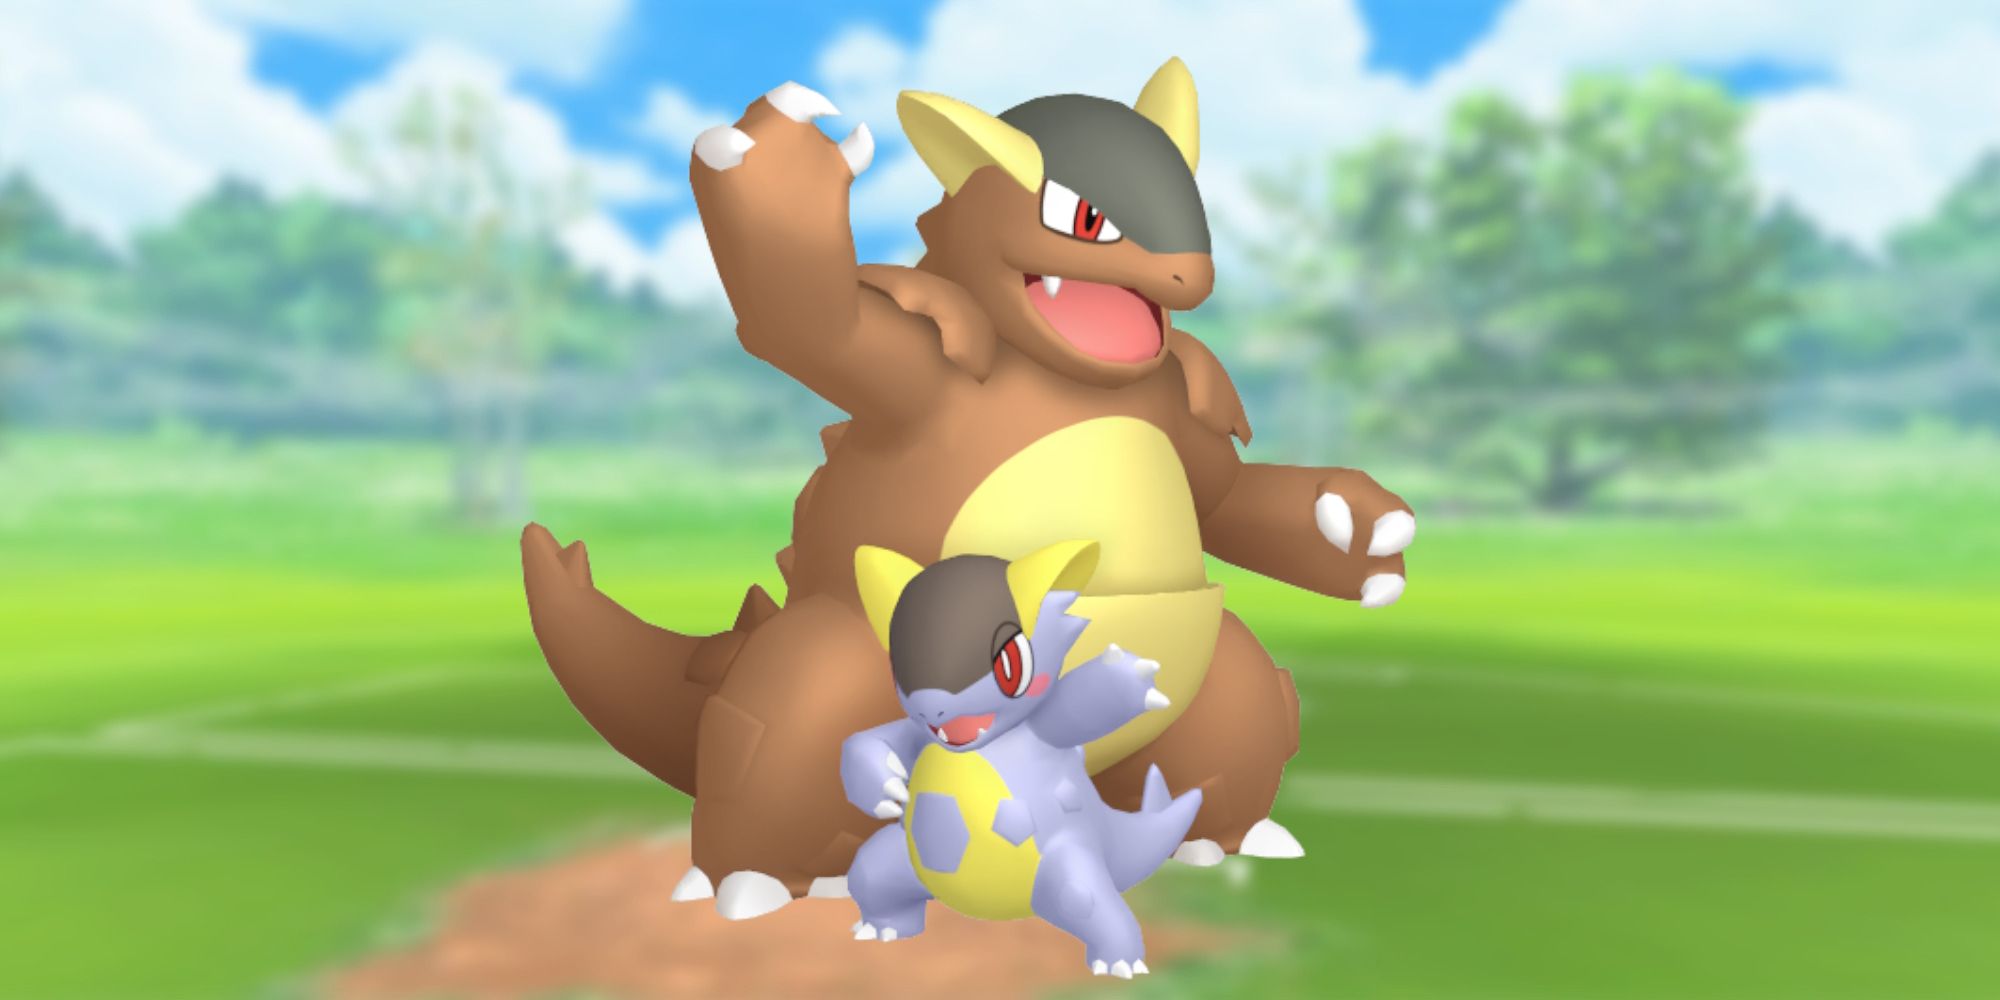 Mega Kangaskhan with the Pokémon Go Battlefield as a background